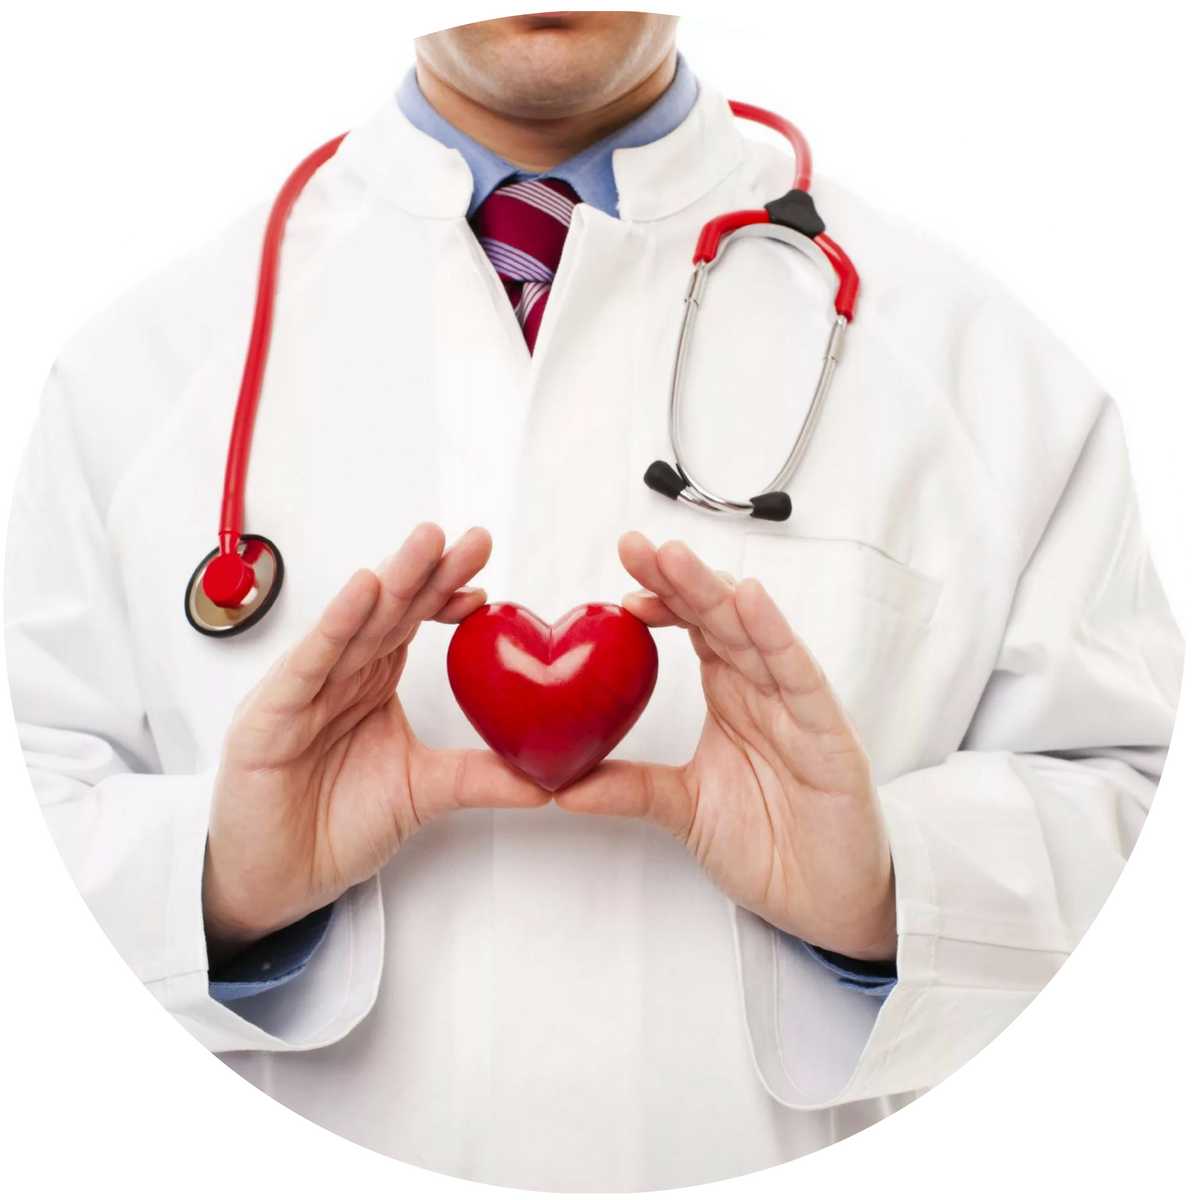 Врач с сердцем. Сердце кардиология. Сердце кардиолог. Сердечко медицина.